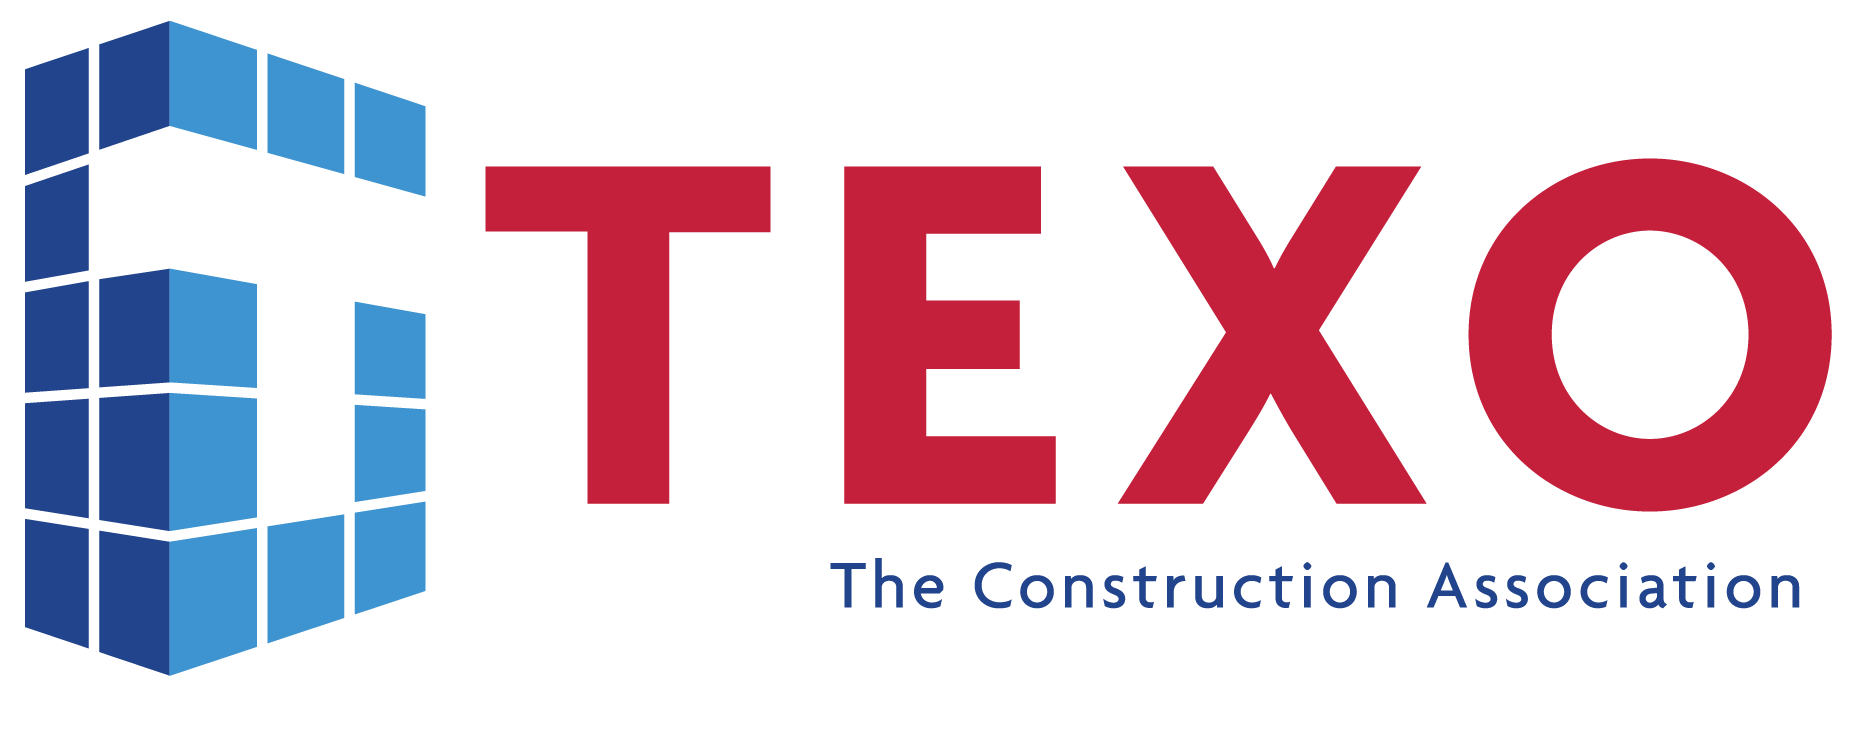 Texo Construction Association